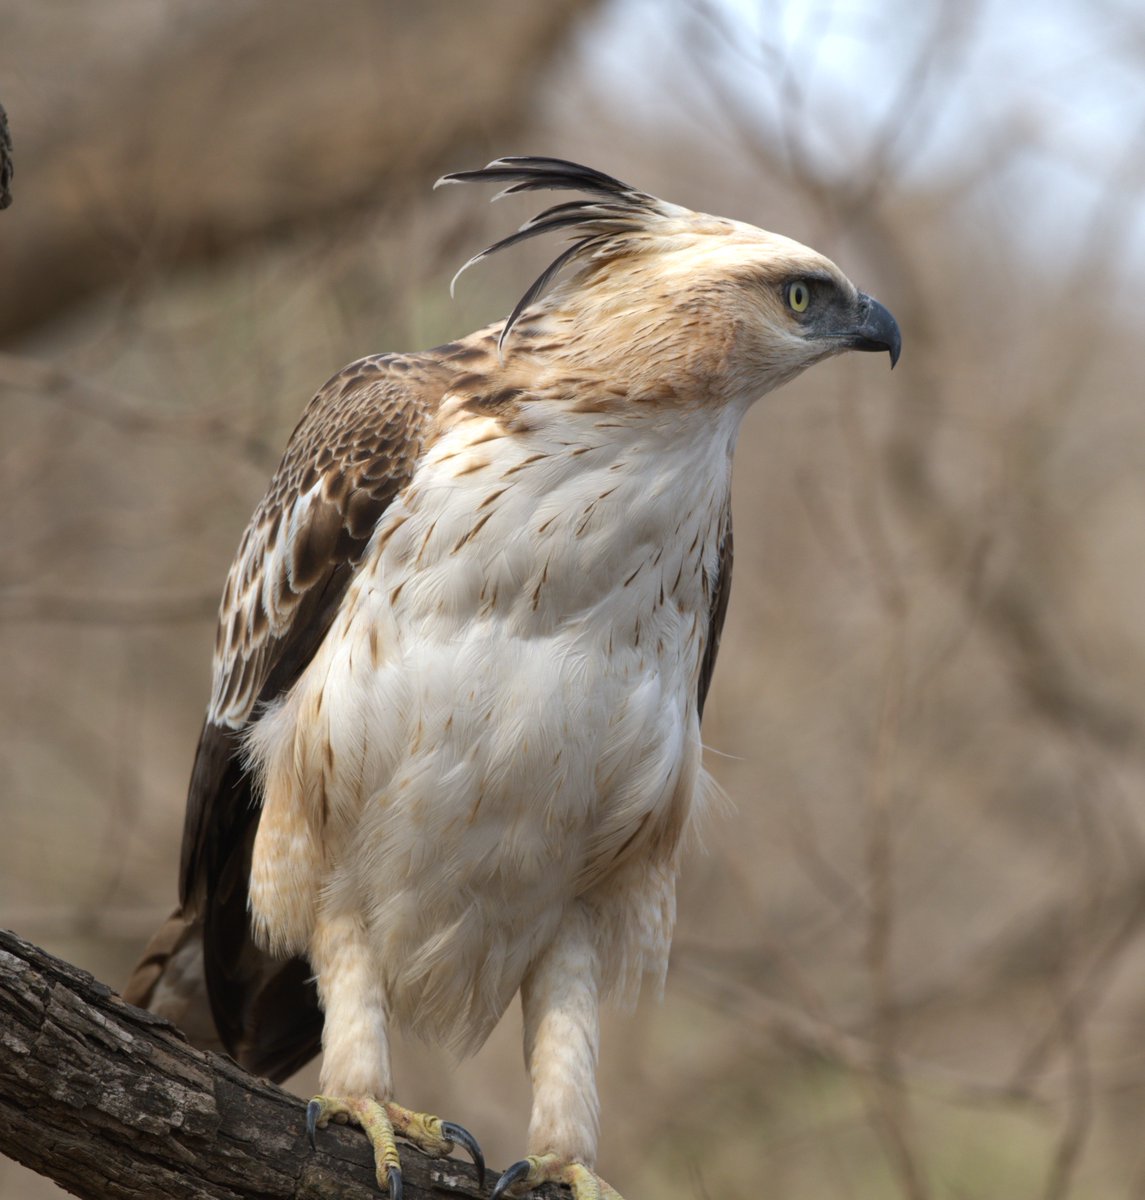 #Eagle some time look other side also #SasanGir #Gujarat #twitter #IndiAves #nature #wildlife
@IndiAves🙏#ThePhotoHour
 @dcfsasangir @GujForestDept
@GujaratTourism @NatGeoIndia @incredibleindia
@birdsaroundme @BirdWatchingMy @PlaceForBirds
@InfoGujarat @HoffPccf @birdnames_en